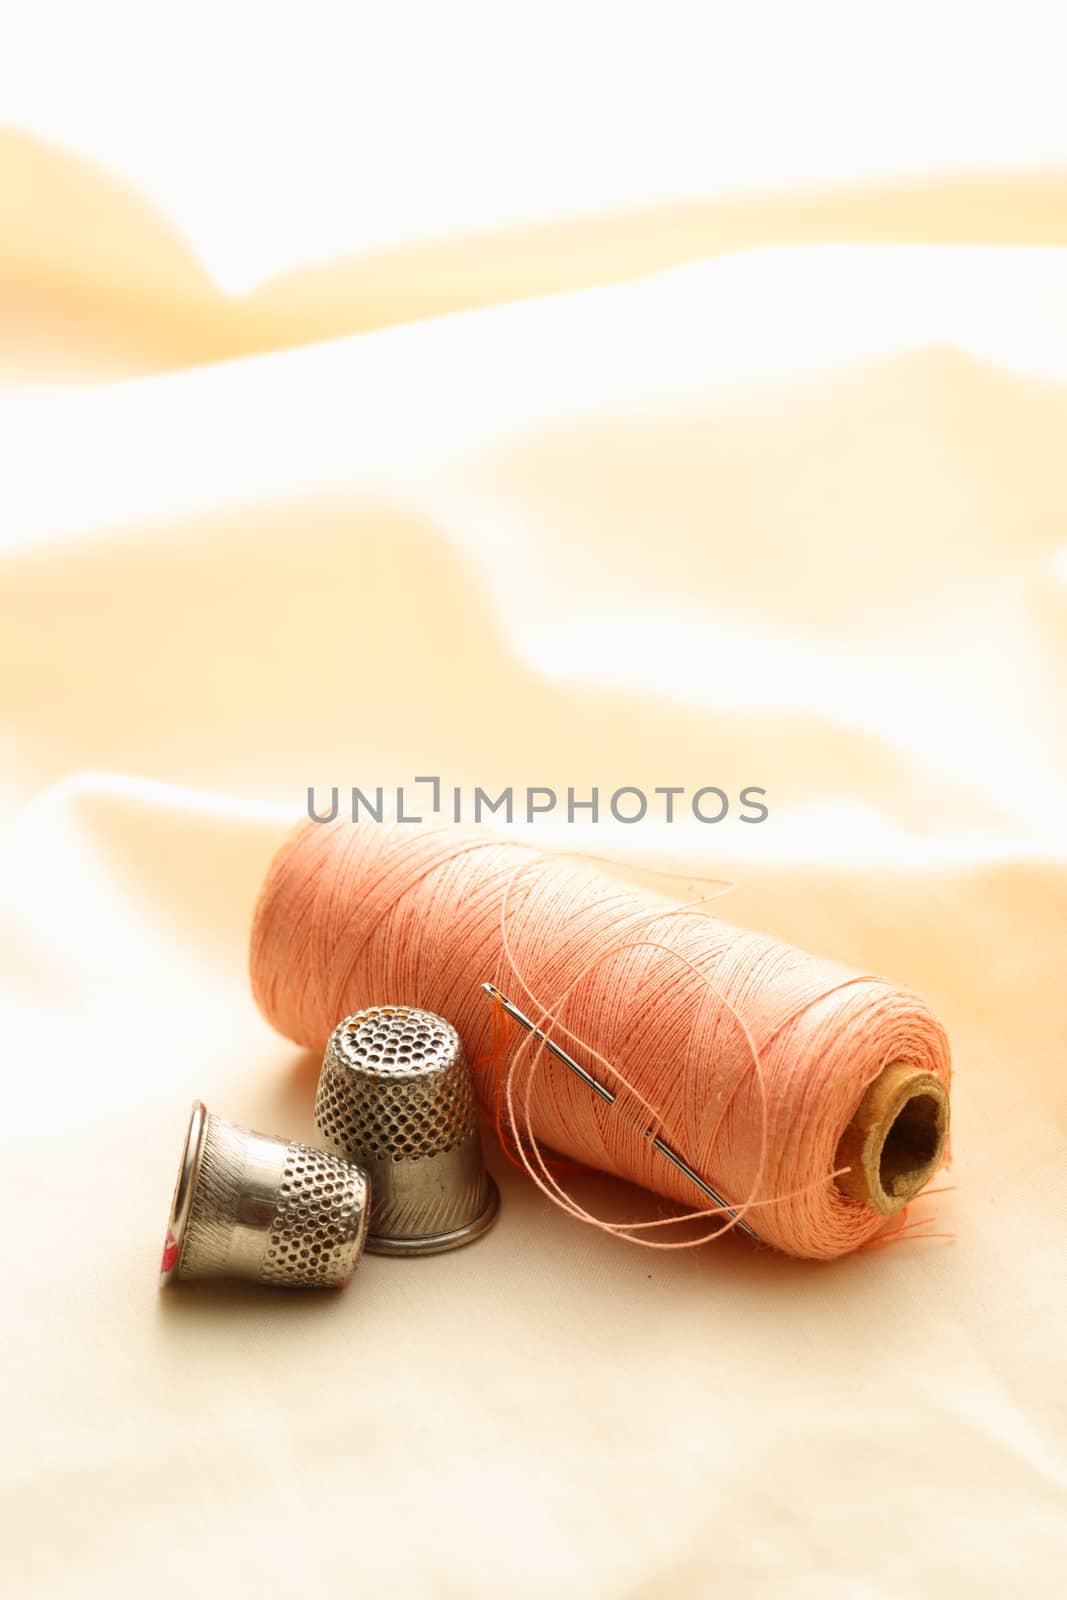 Sewing thimbles, bobbin and needle on silk cloth